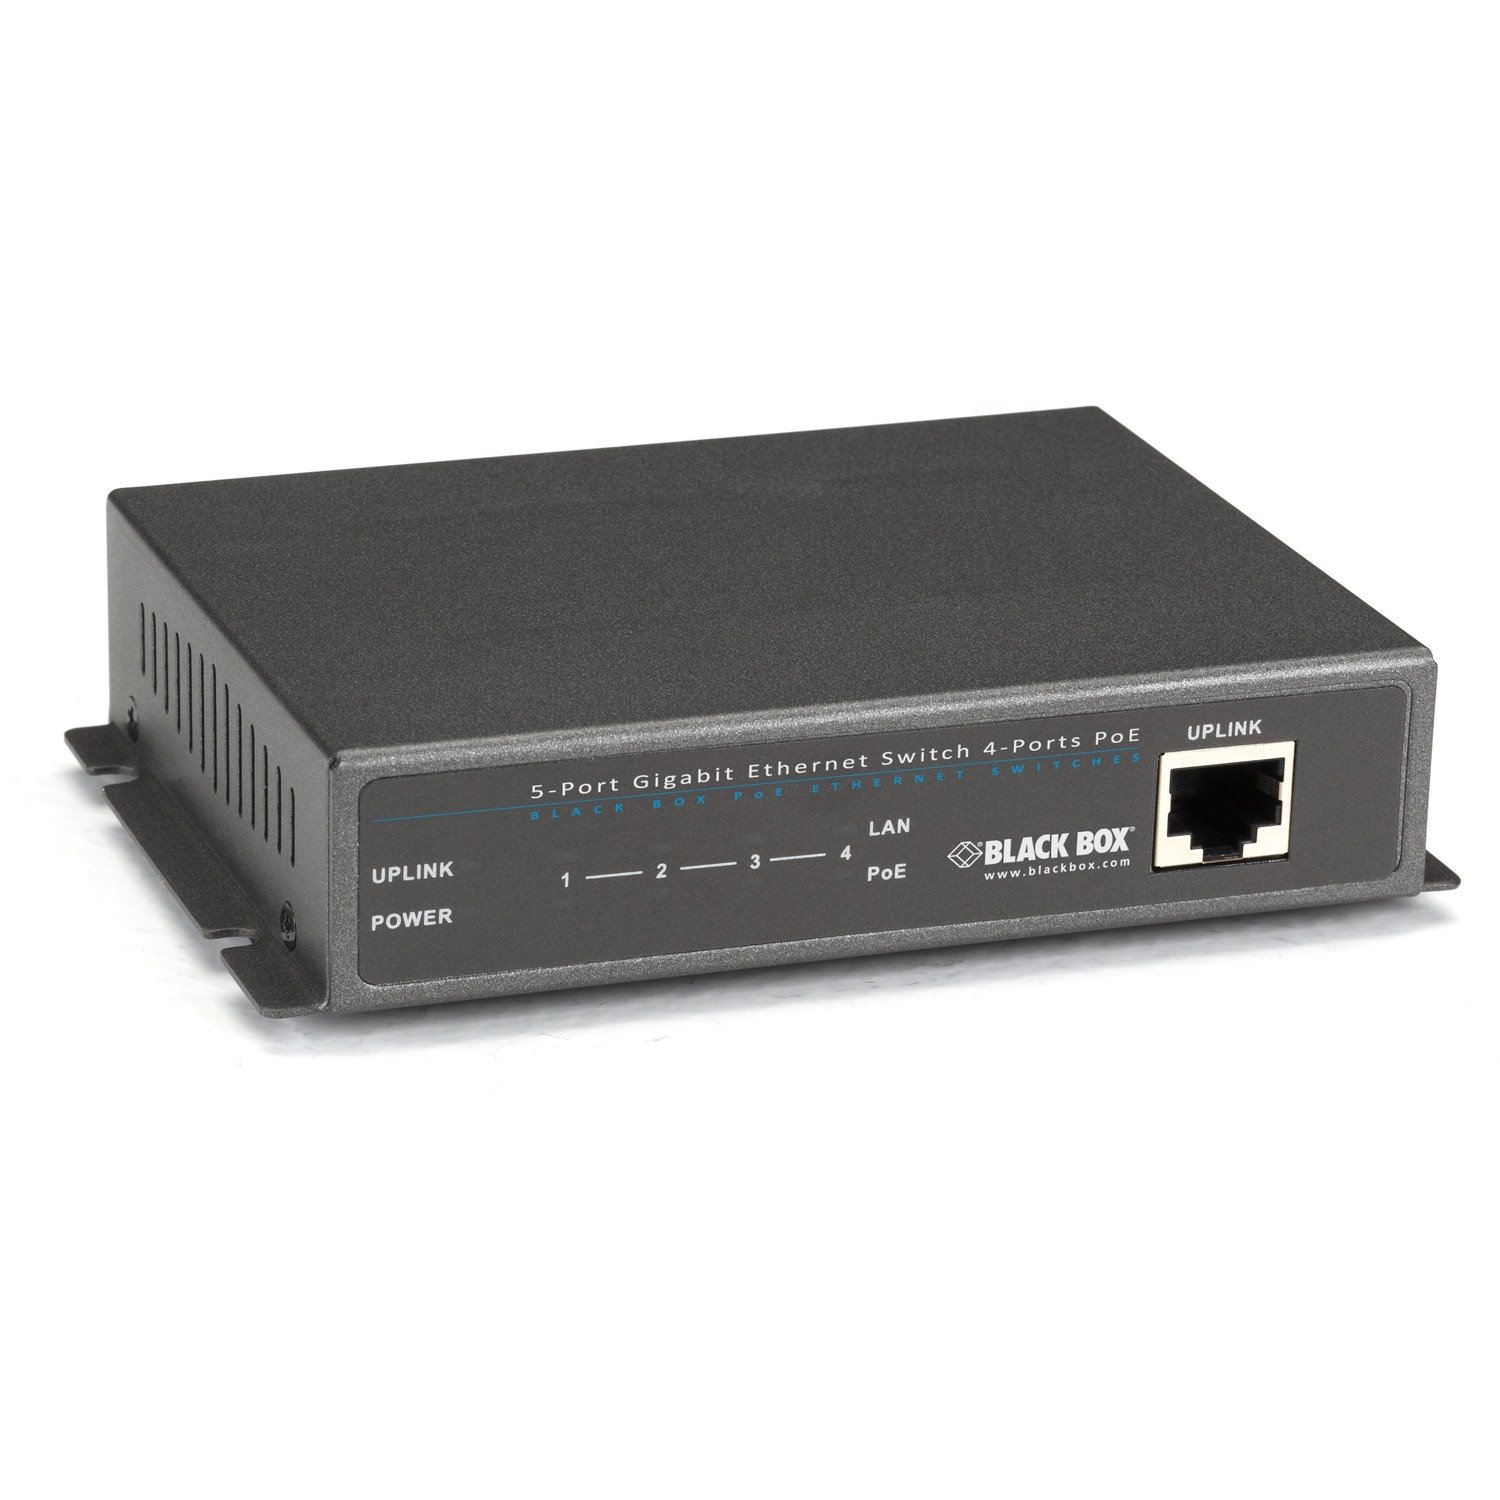 Black Box LPB1200 Series Gigabit Ethernet Switch - PoE, 5-Port